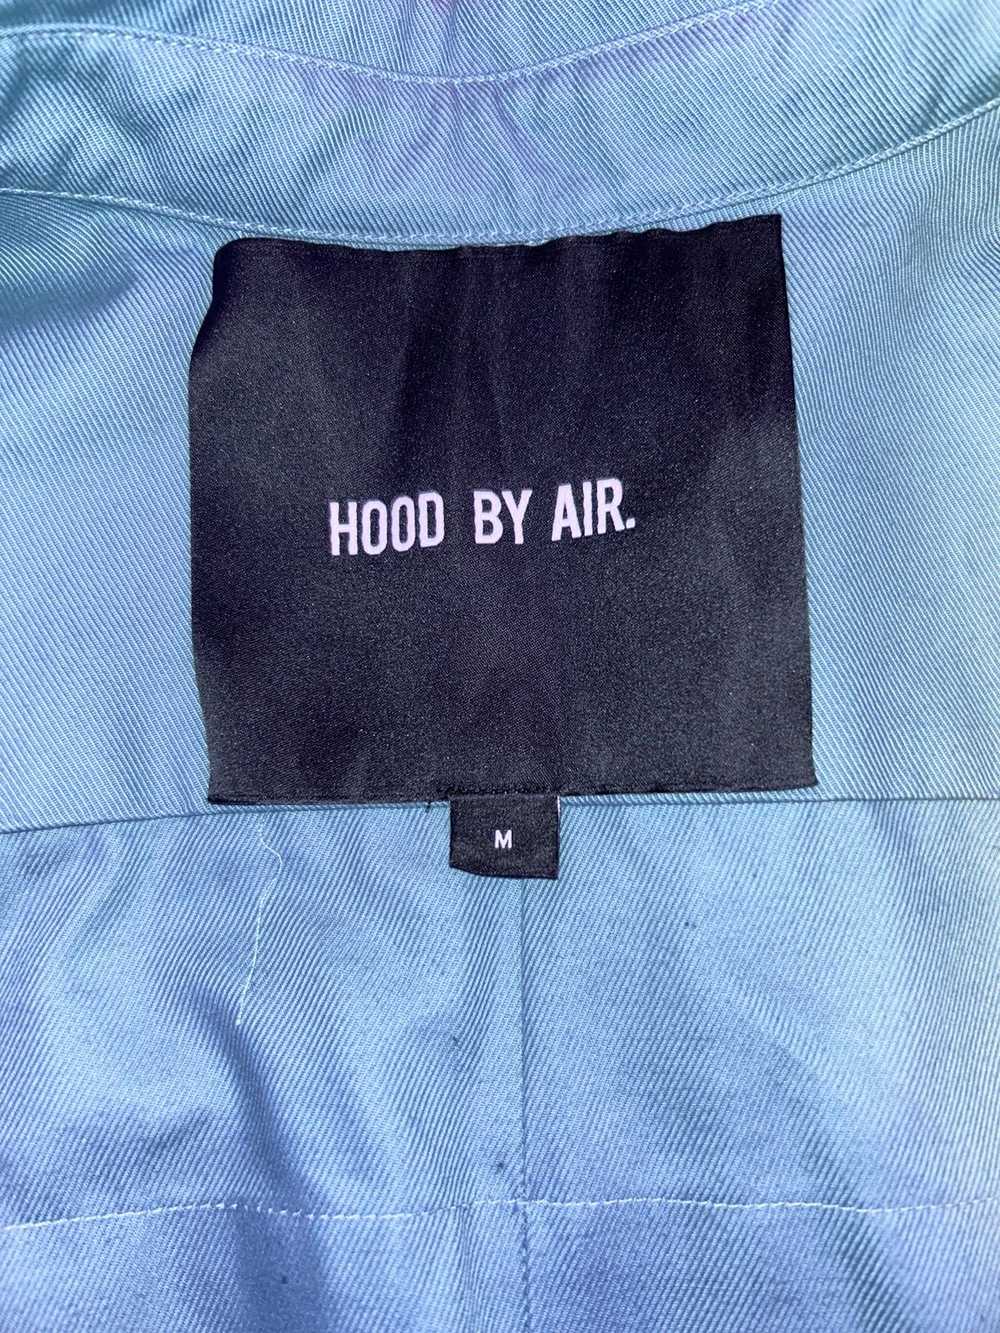 Hood By Air Hood by Air “Veteran” Shirt - image 6